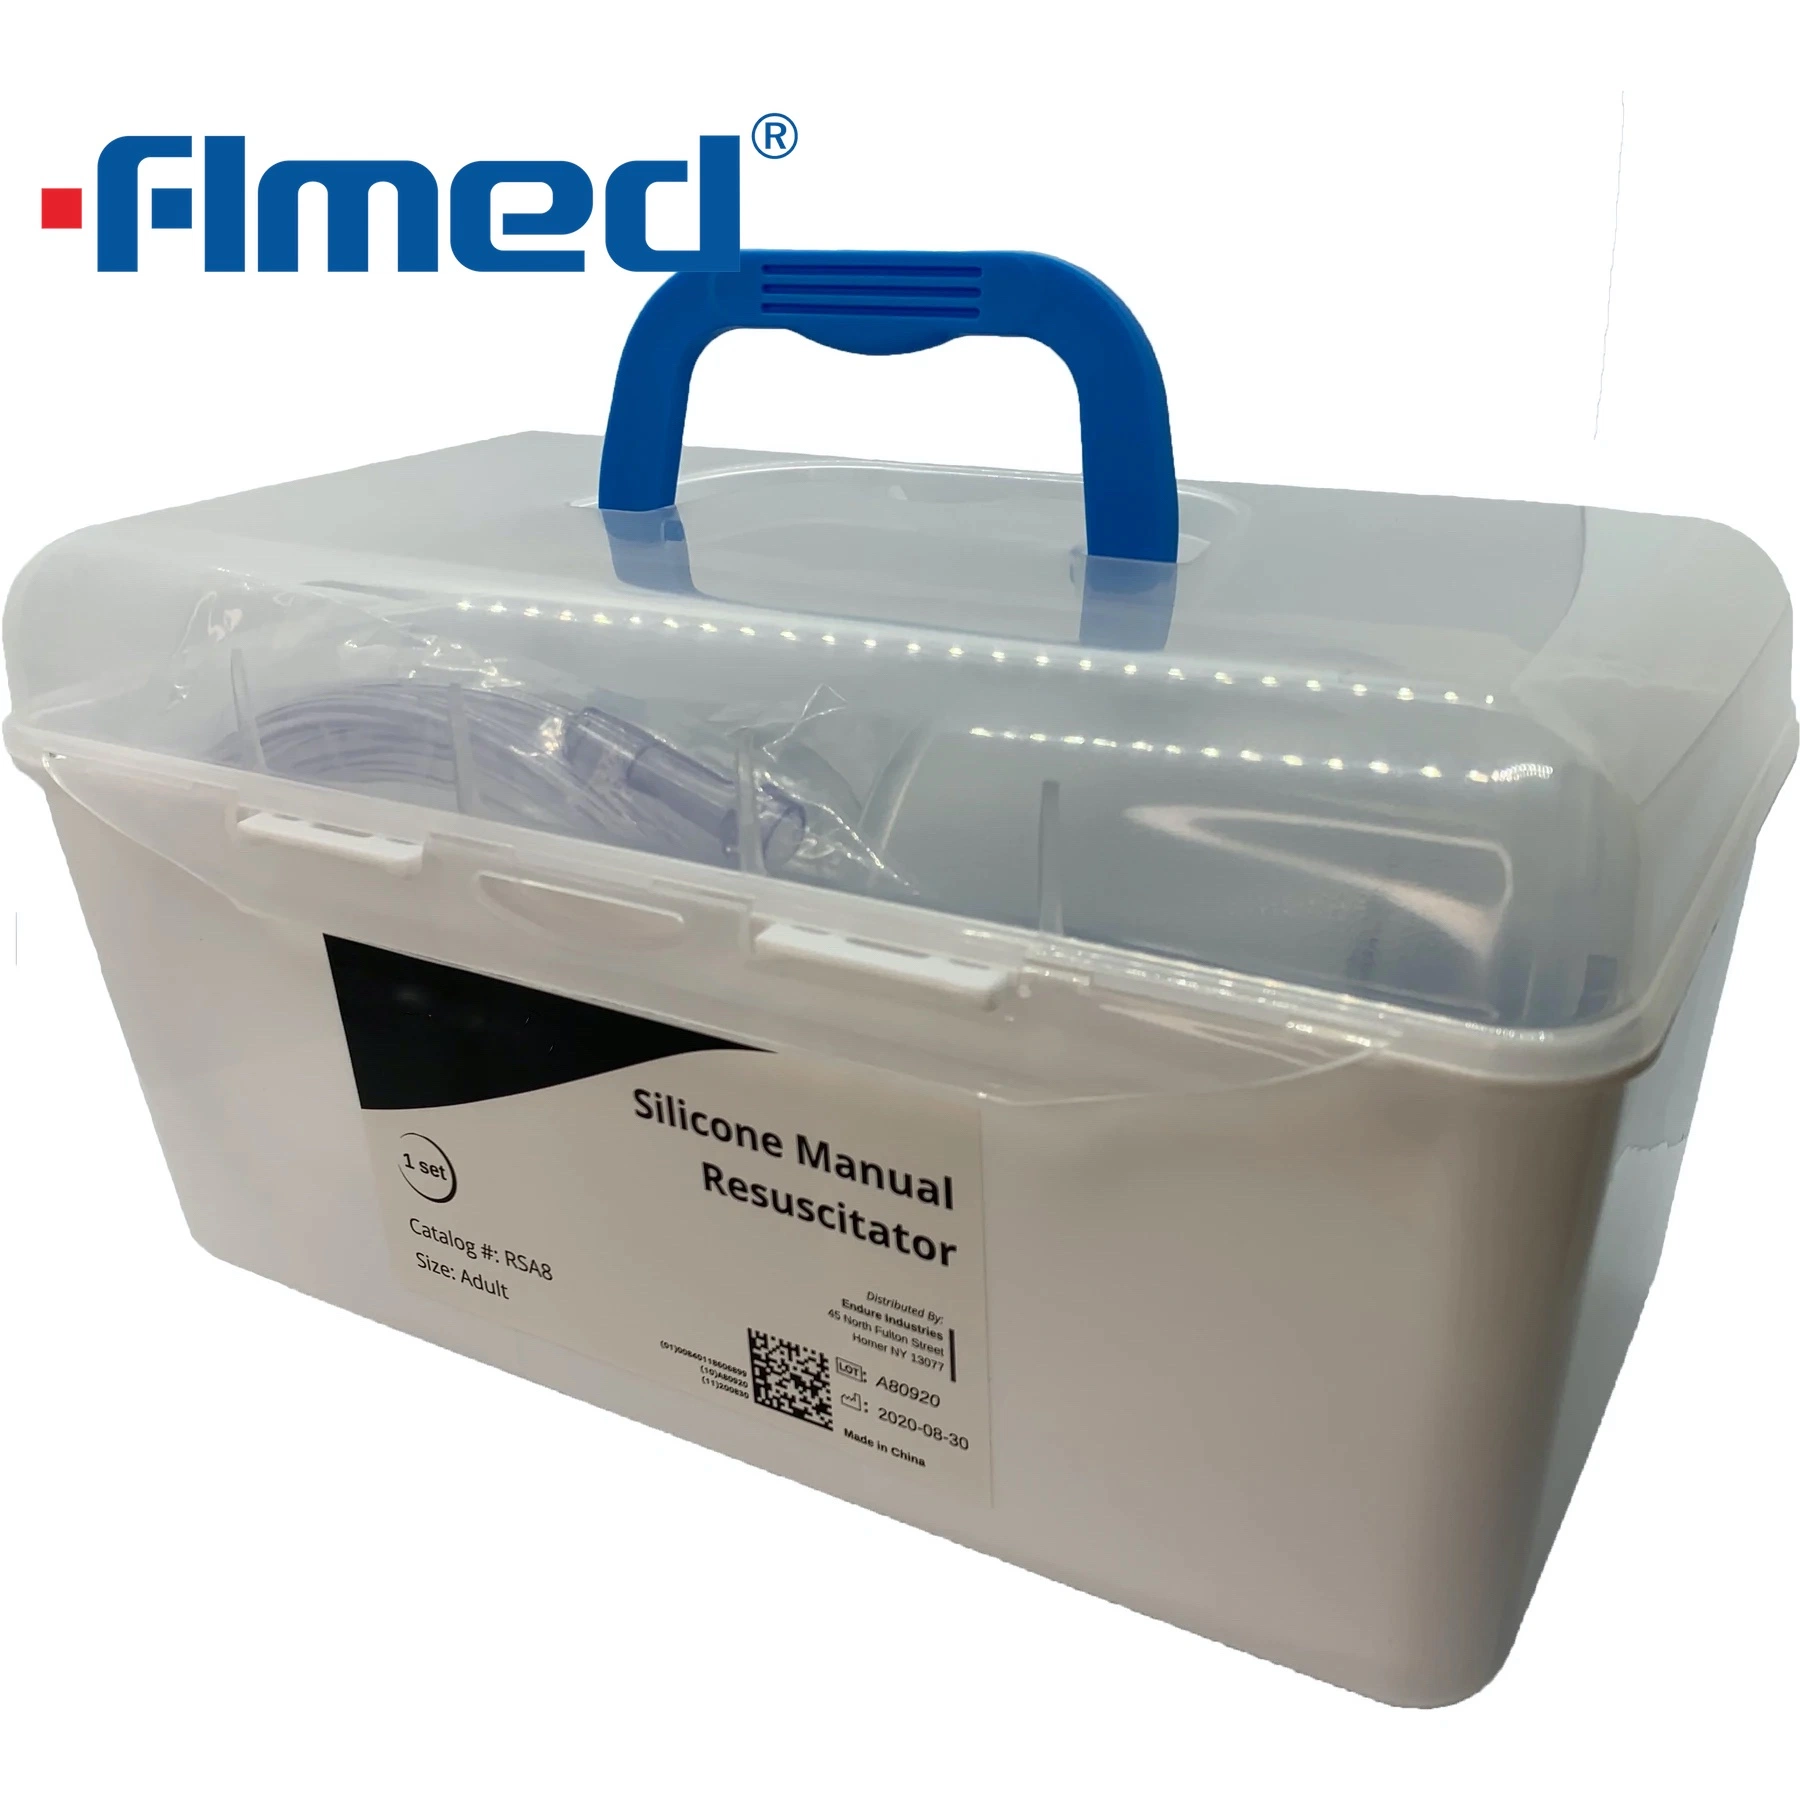 China Wholesale/Supplier Medical Supply Medical Silicone Manual Resuscitator Ambu Bags